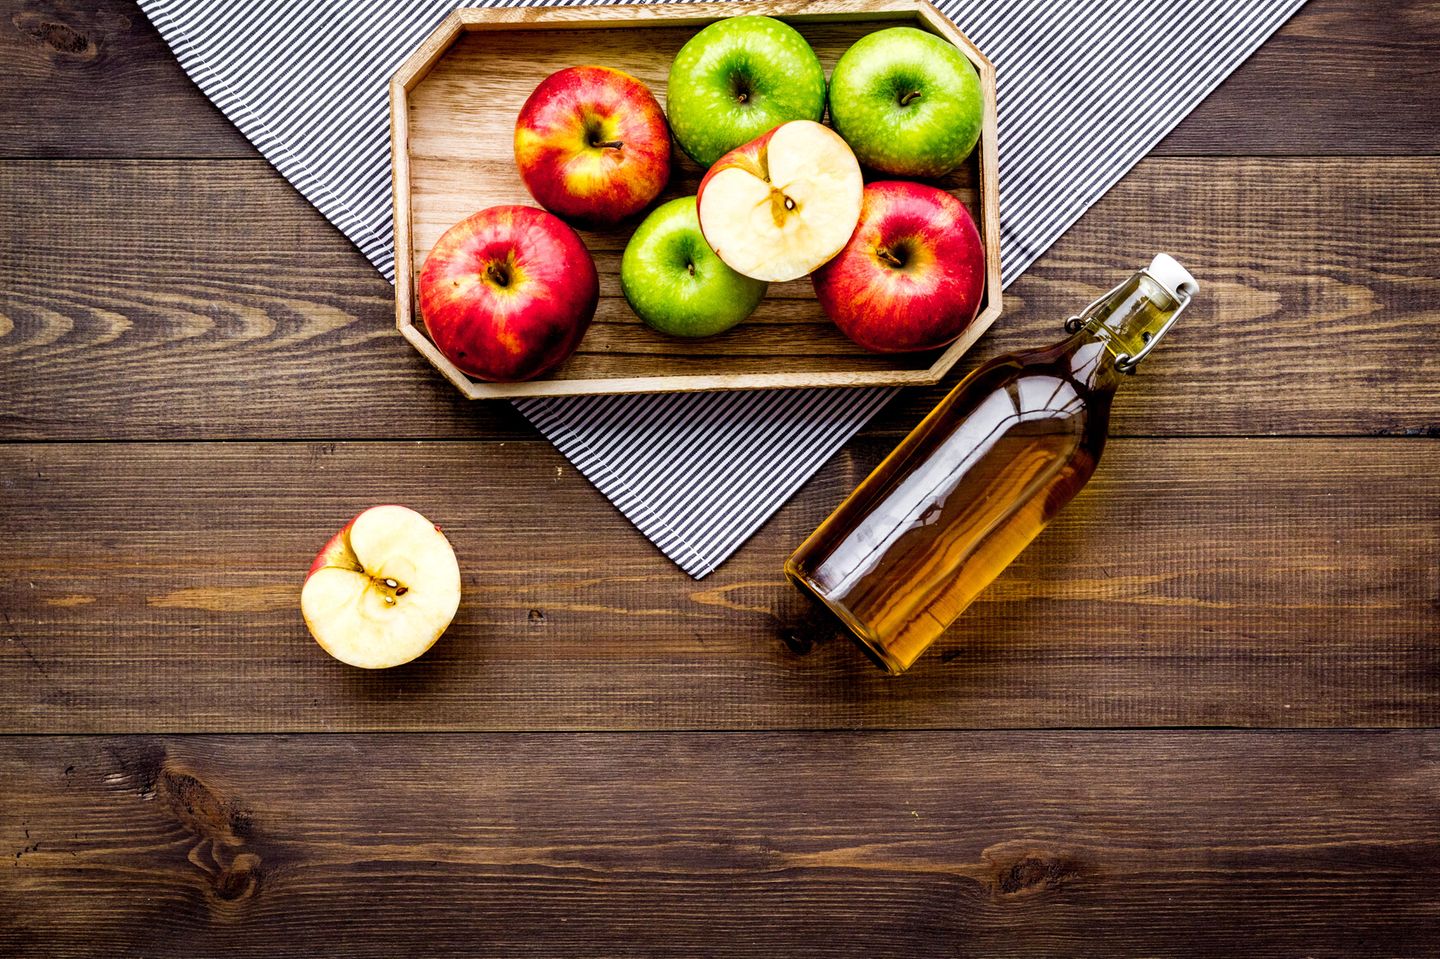 Apple Cider Vinegar Hair: Tray of apples on the table and a bottle of apple cider vinegar